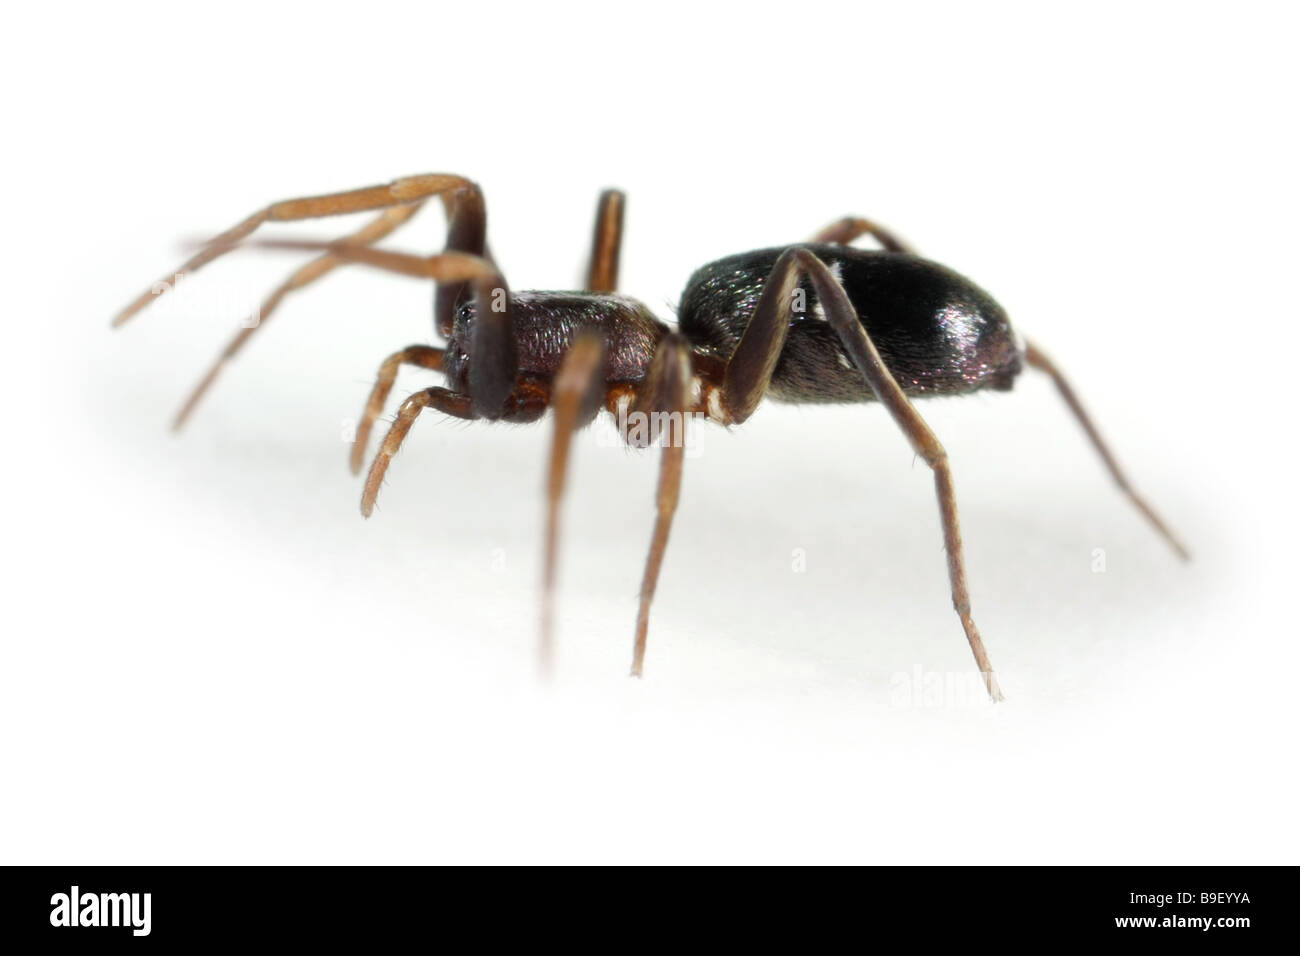 The Ground spider Micaria subopaca, female, family Gnaphosidae, on white background. Stock Photo